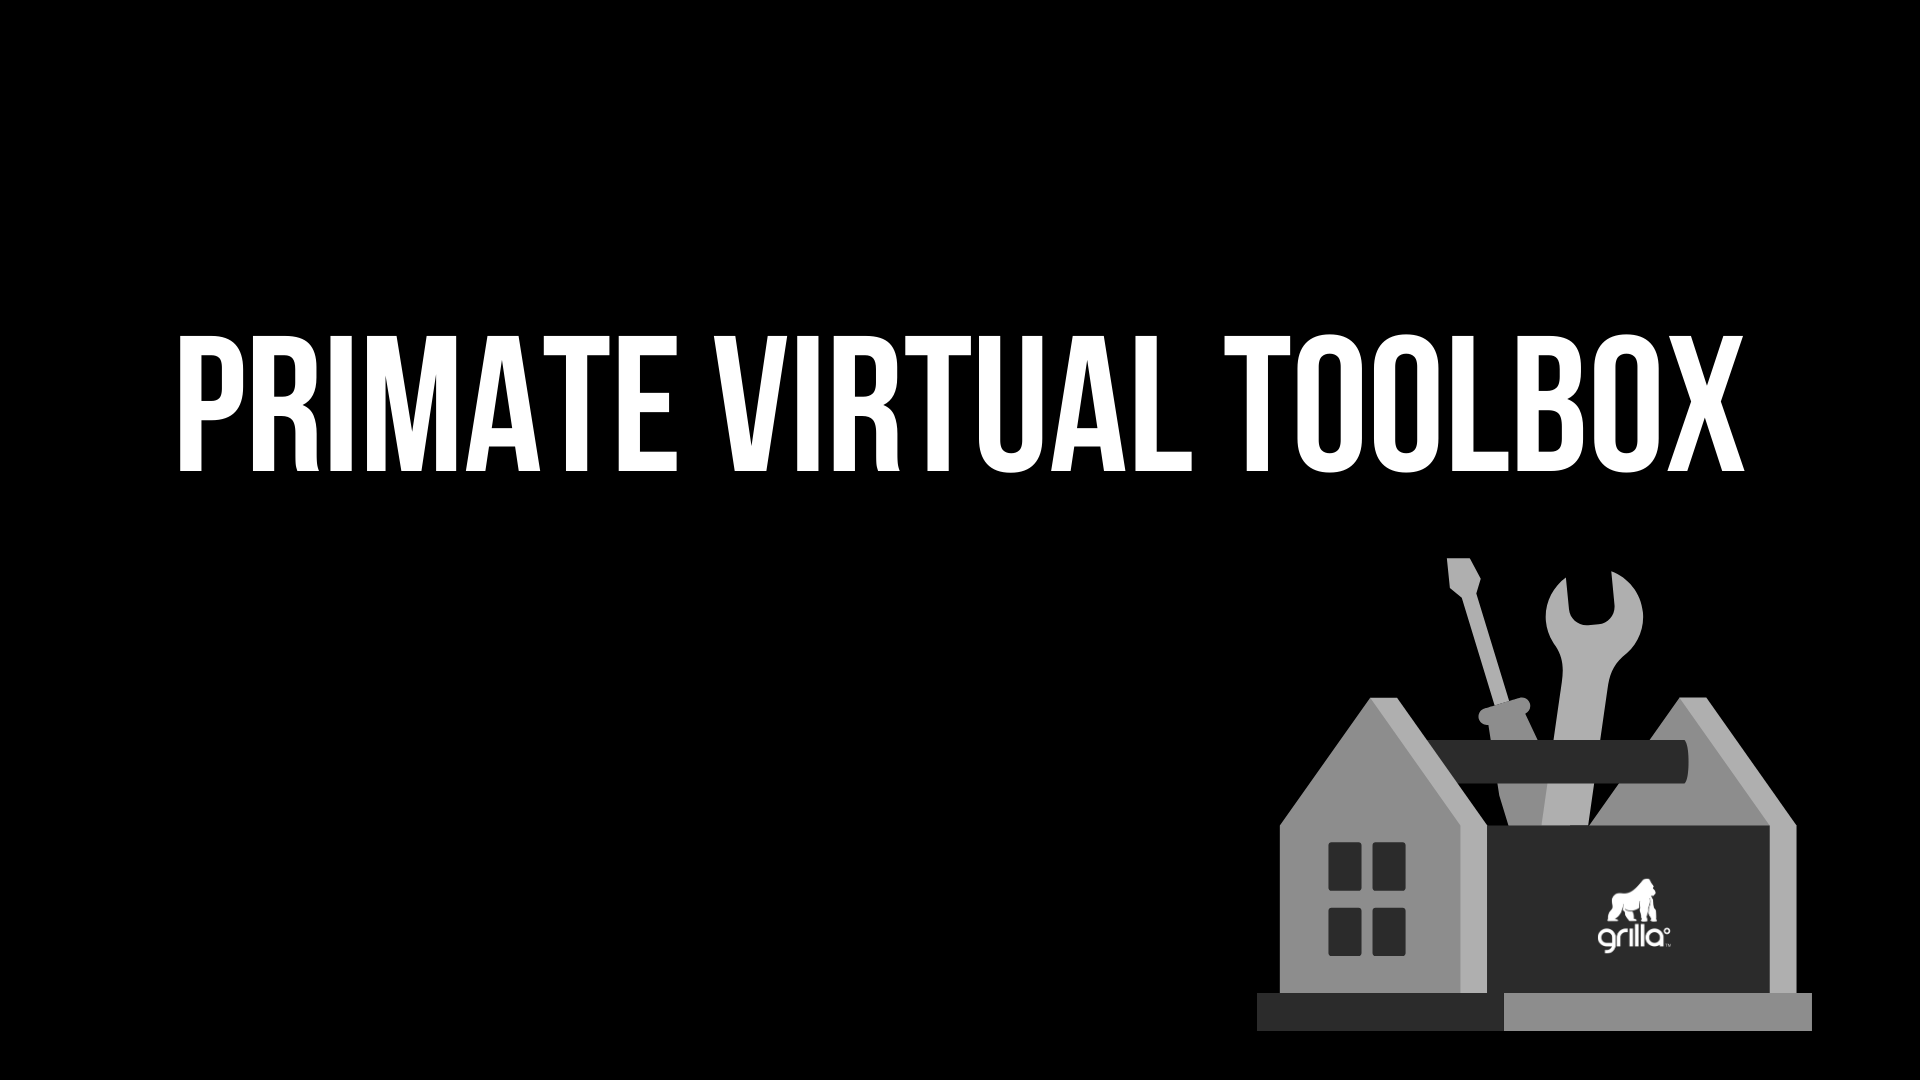 Primate virtual toolbox